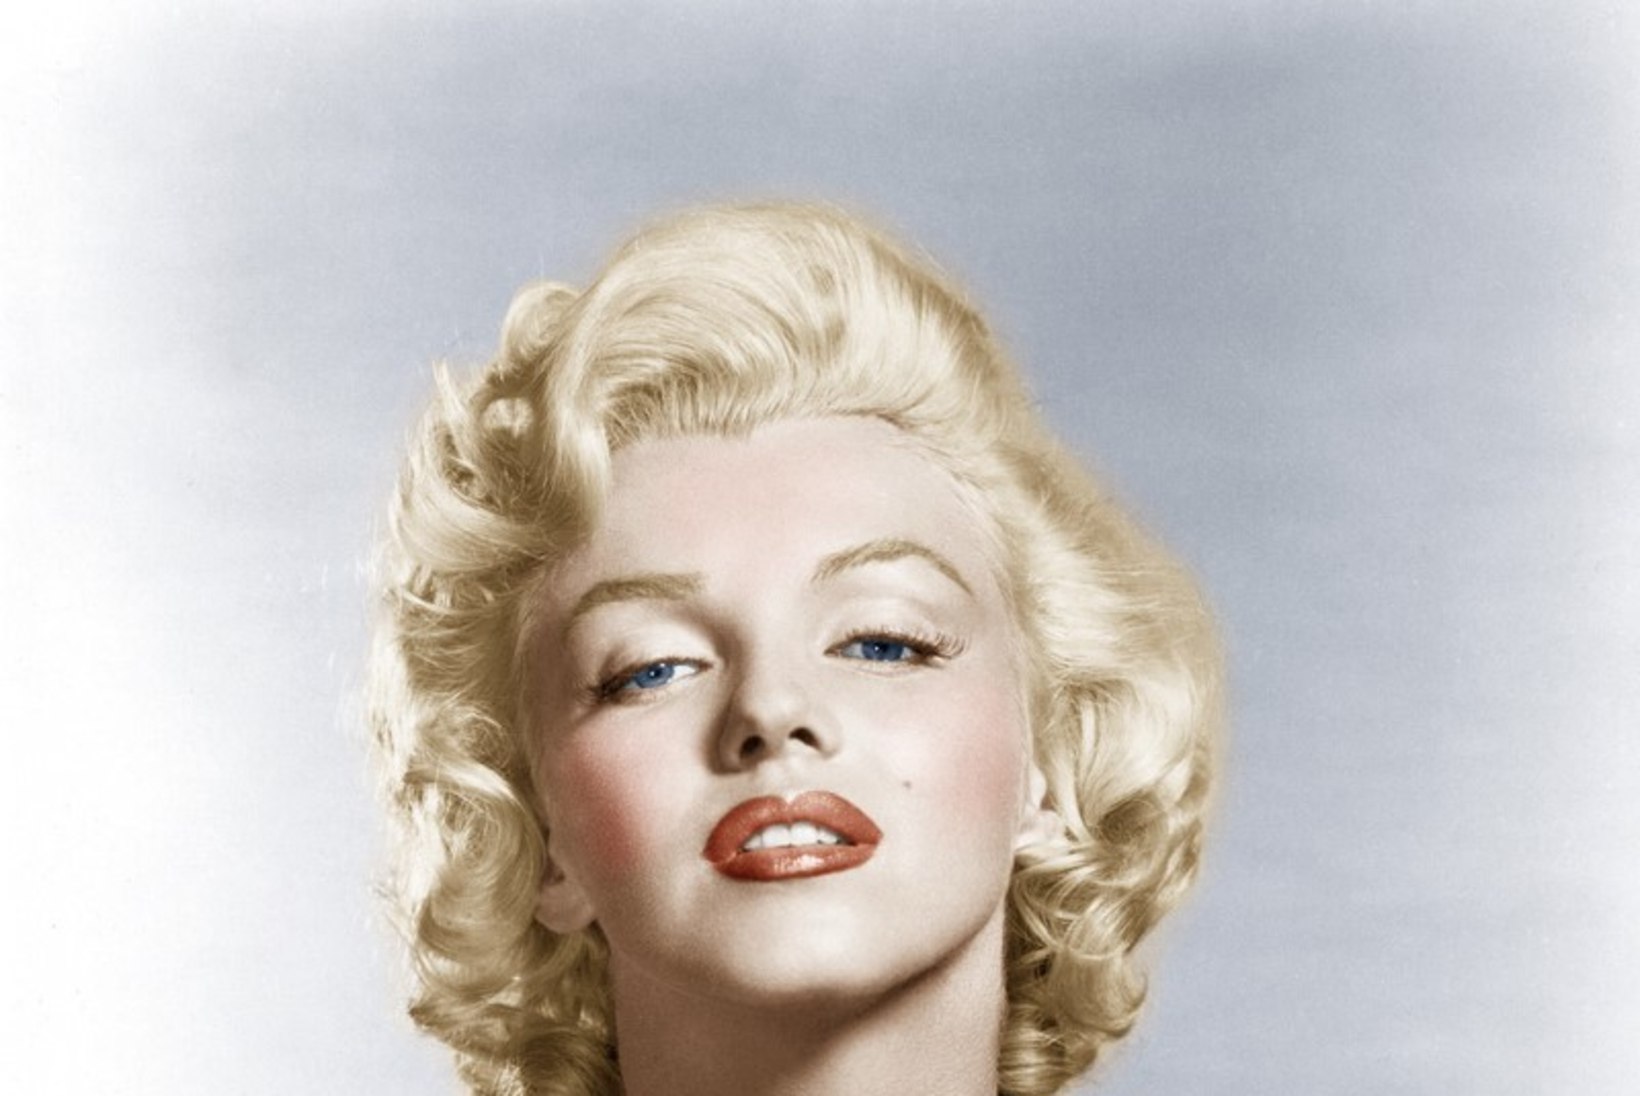 Marilyn Monroe tappis Kennedyte korraldatud mürgisüst?